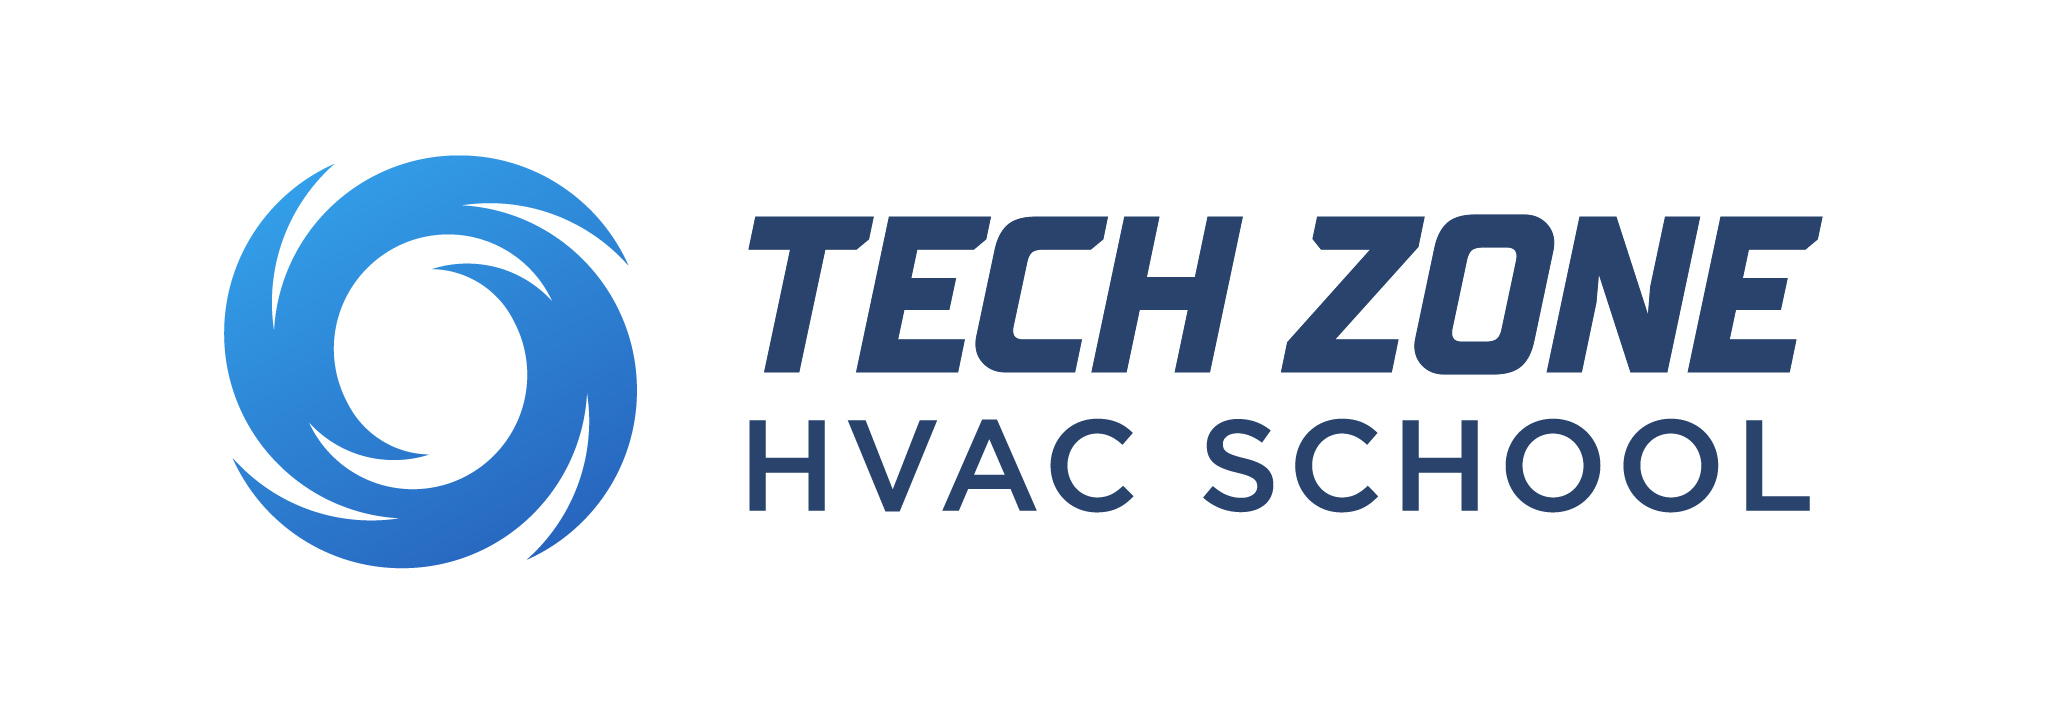 Tech Zone HVAC School Logo